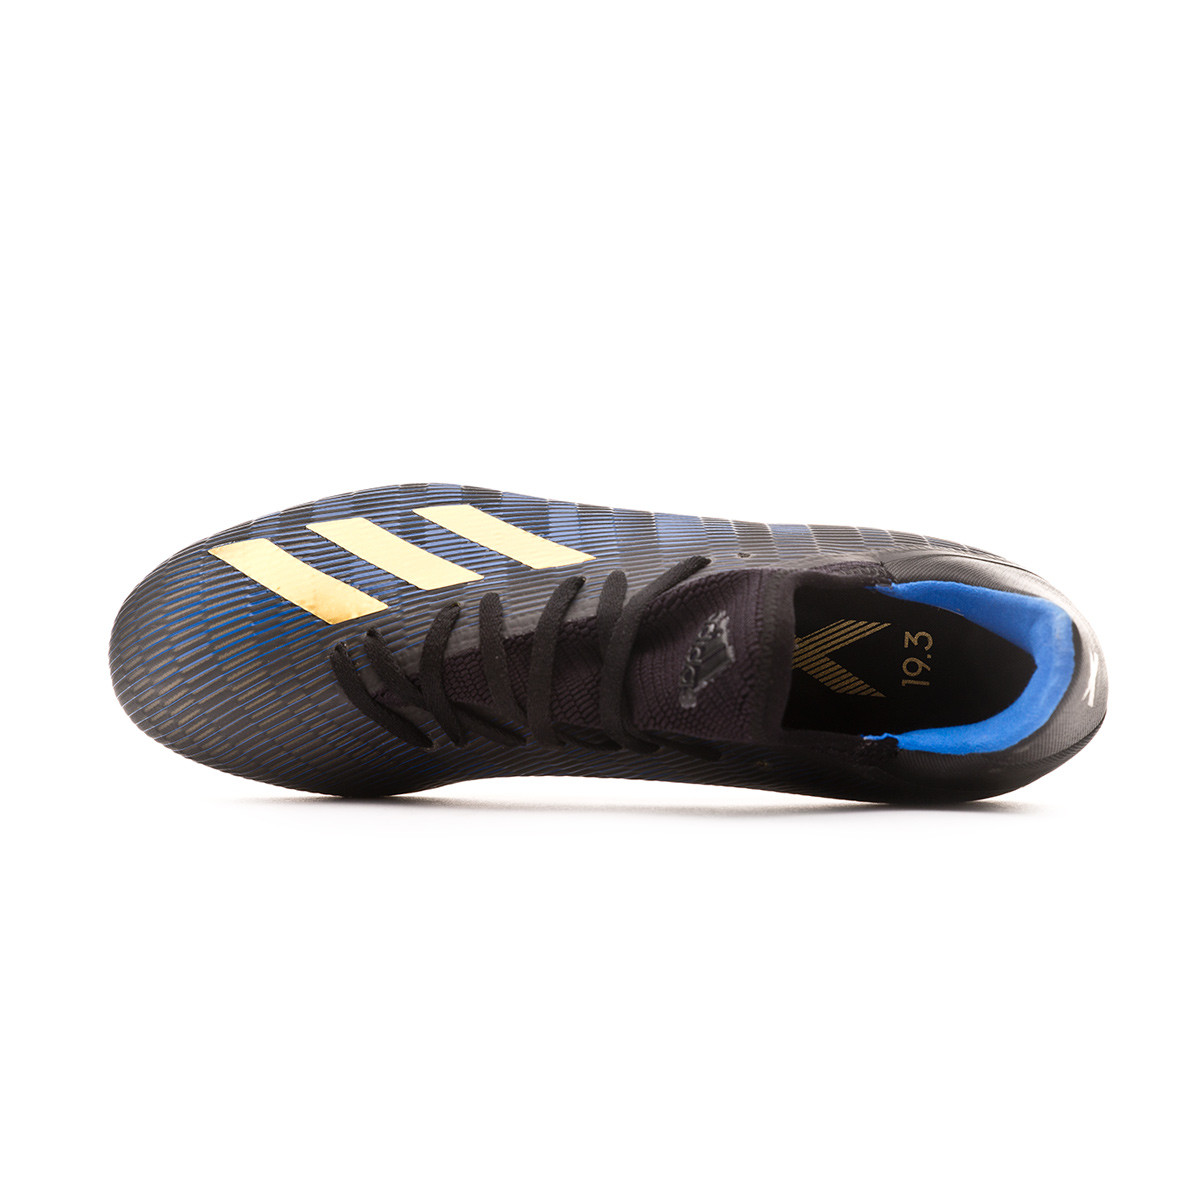 adidas x 19.1 fg core black gold metallic blue